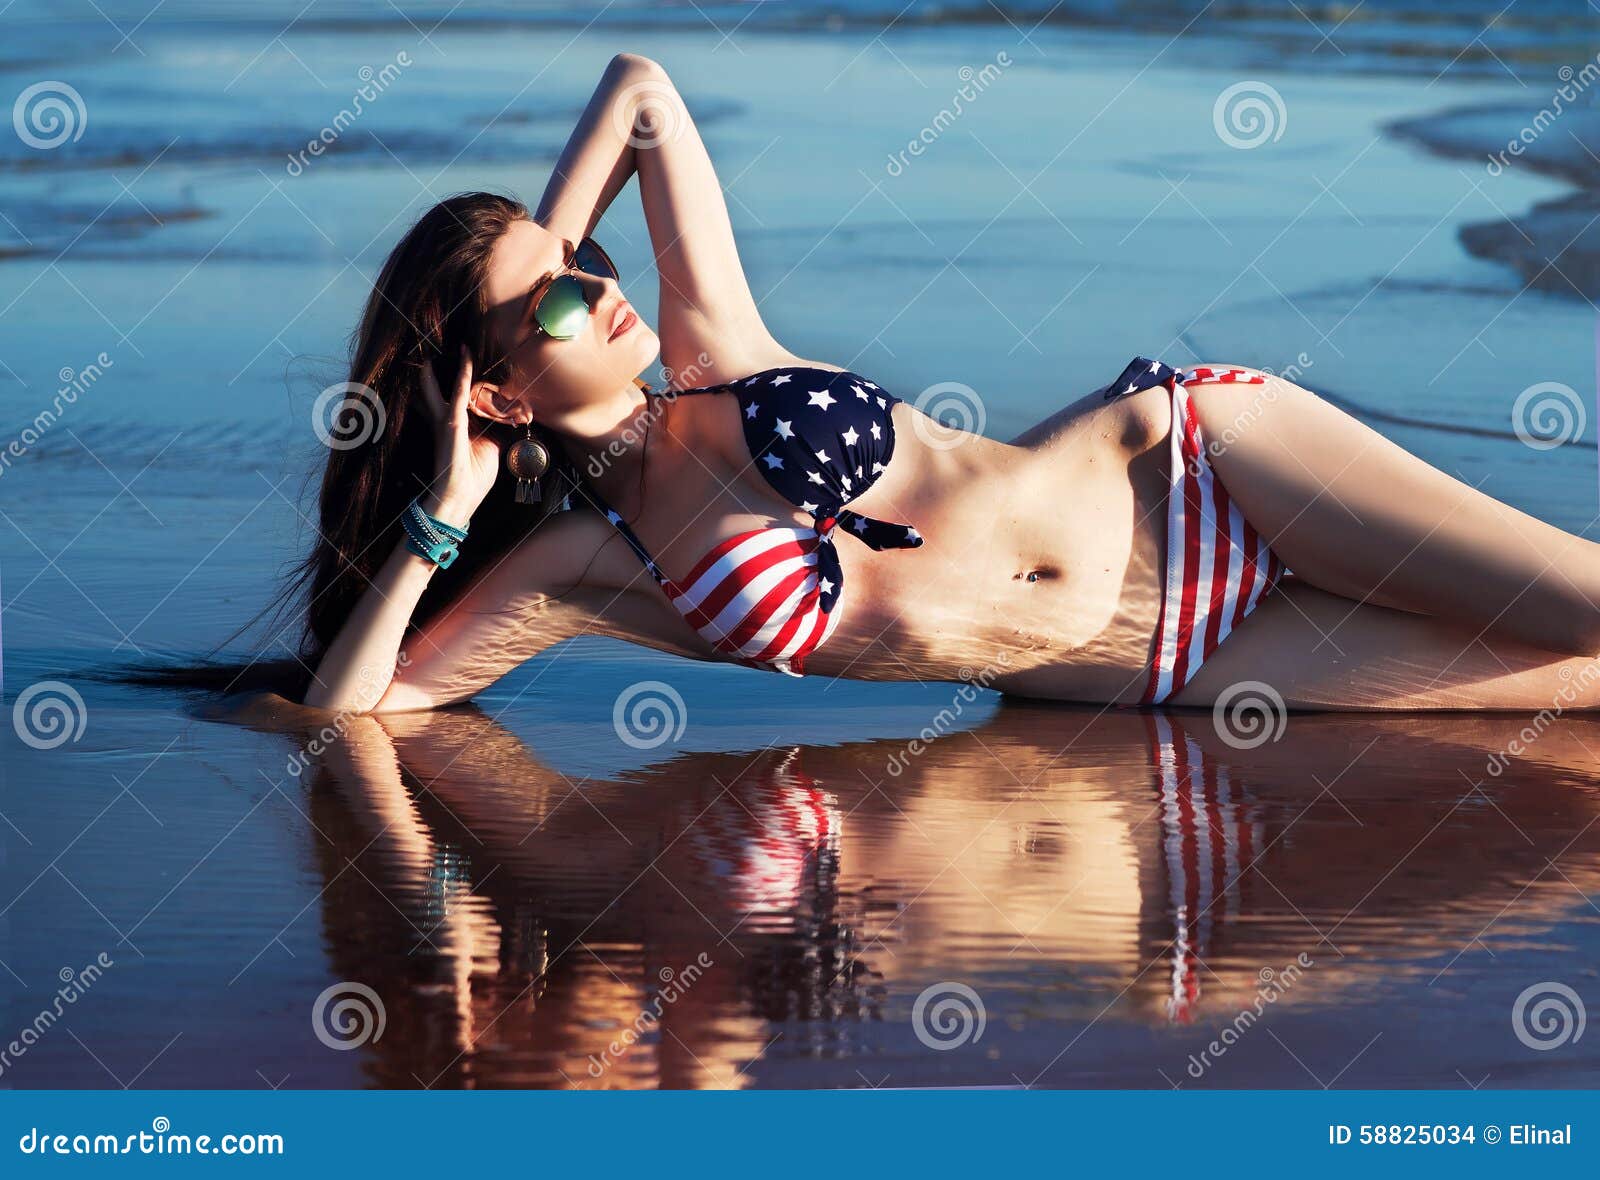 woman-american-flag-bikini-water-sea-waves-fashion-sunglasses-outdoor-58825034.jpg